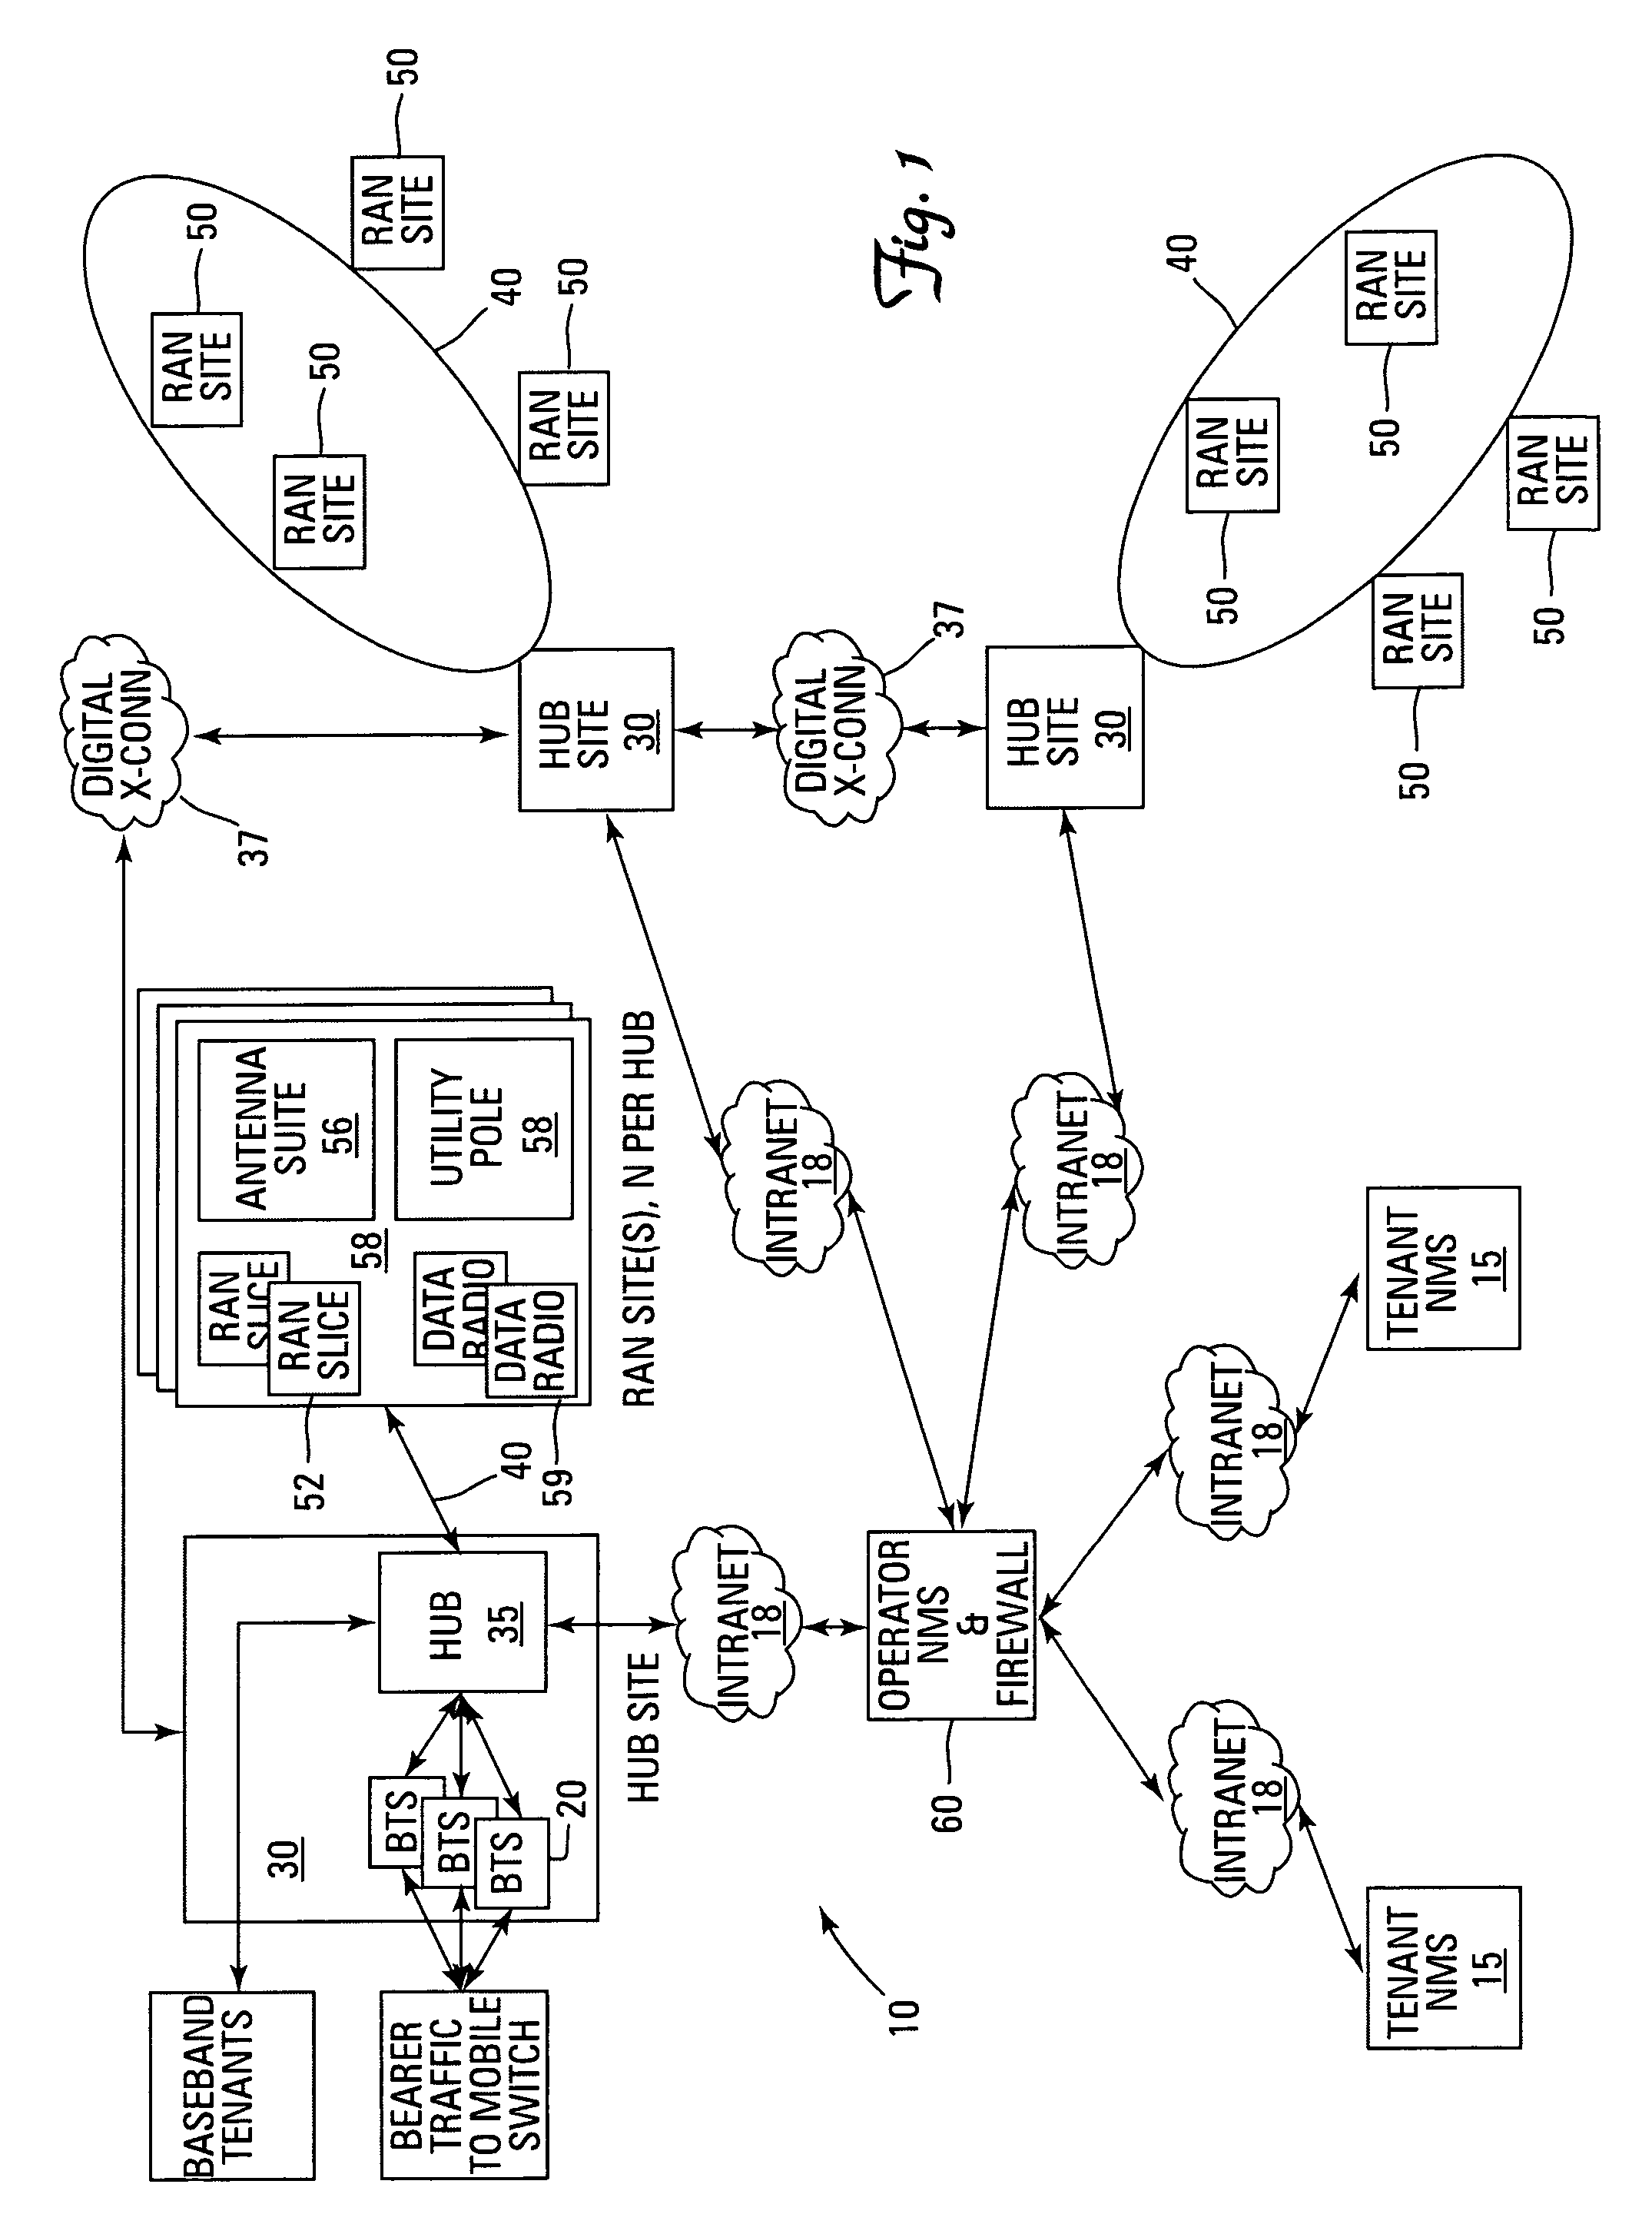 Multi-protocol distributed wireless system architecture